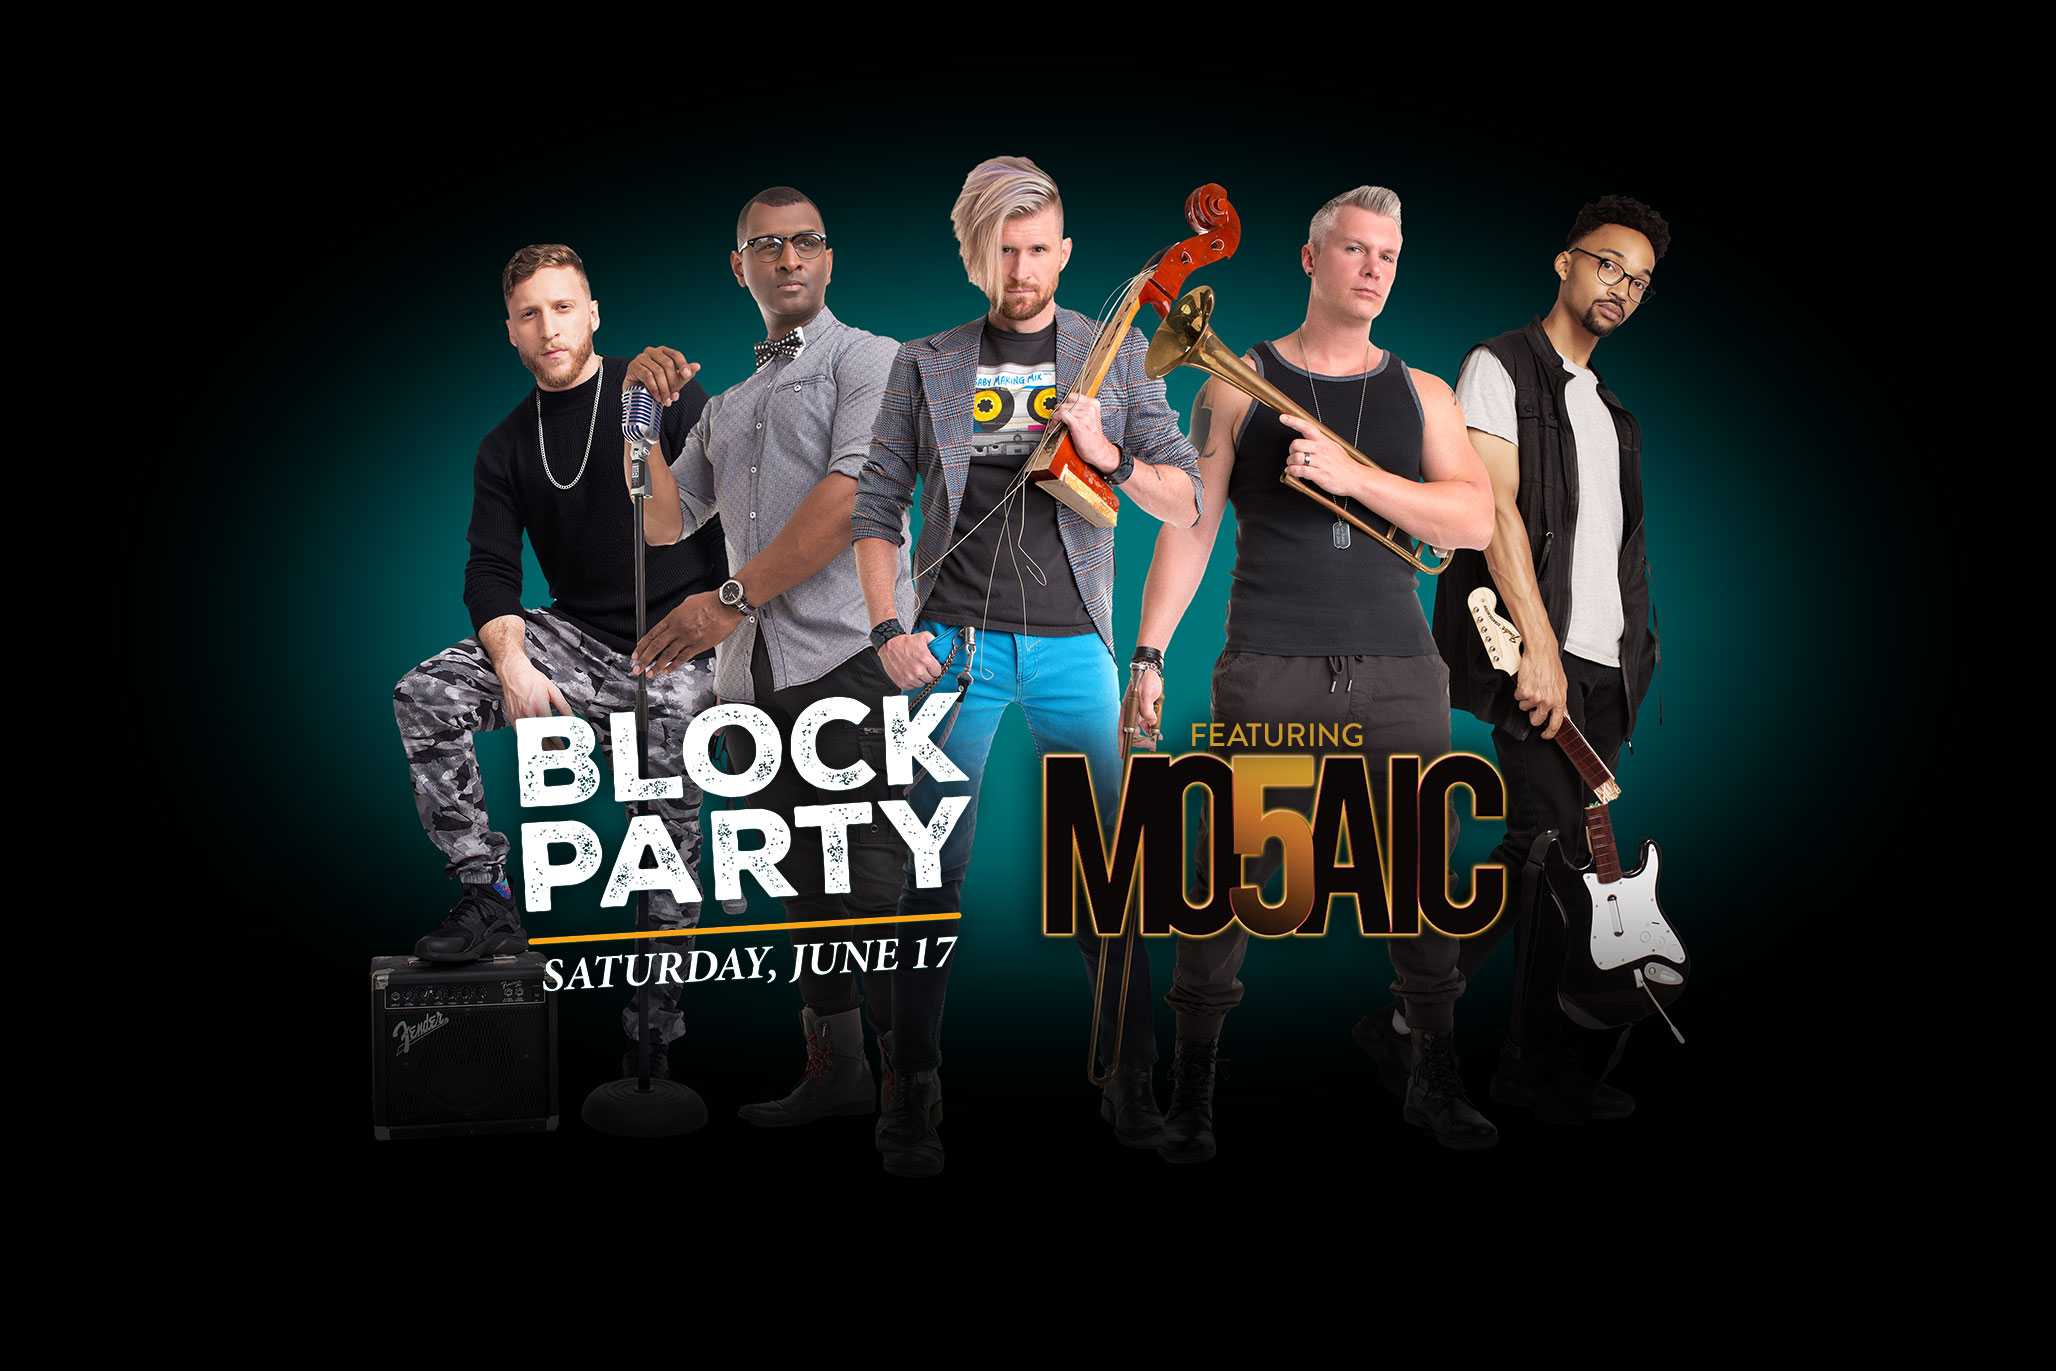 Block Party Saturday June 17 Featuring Mo5aic.